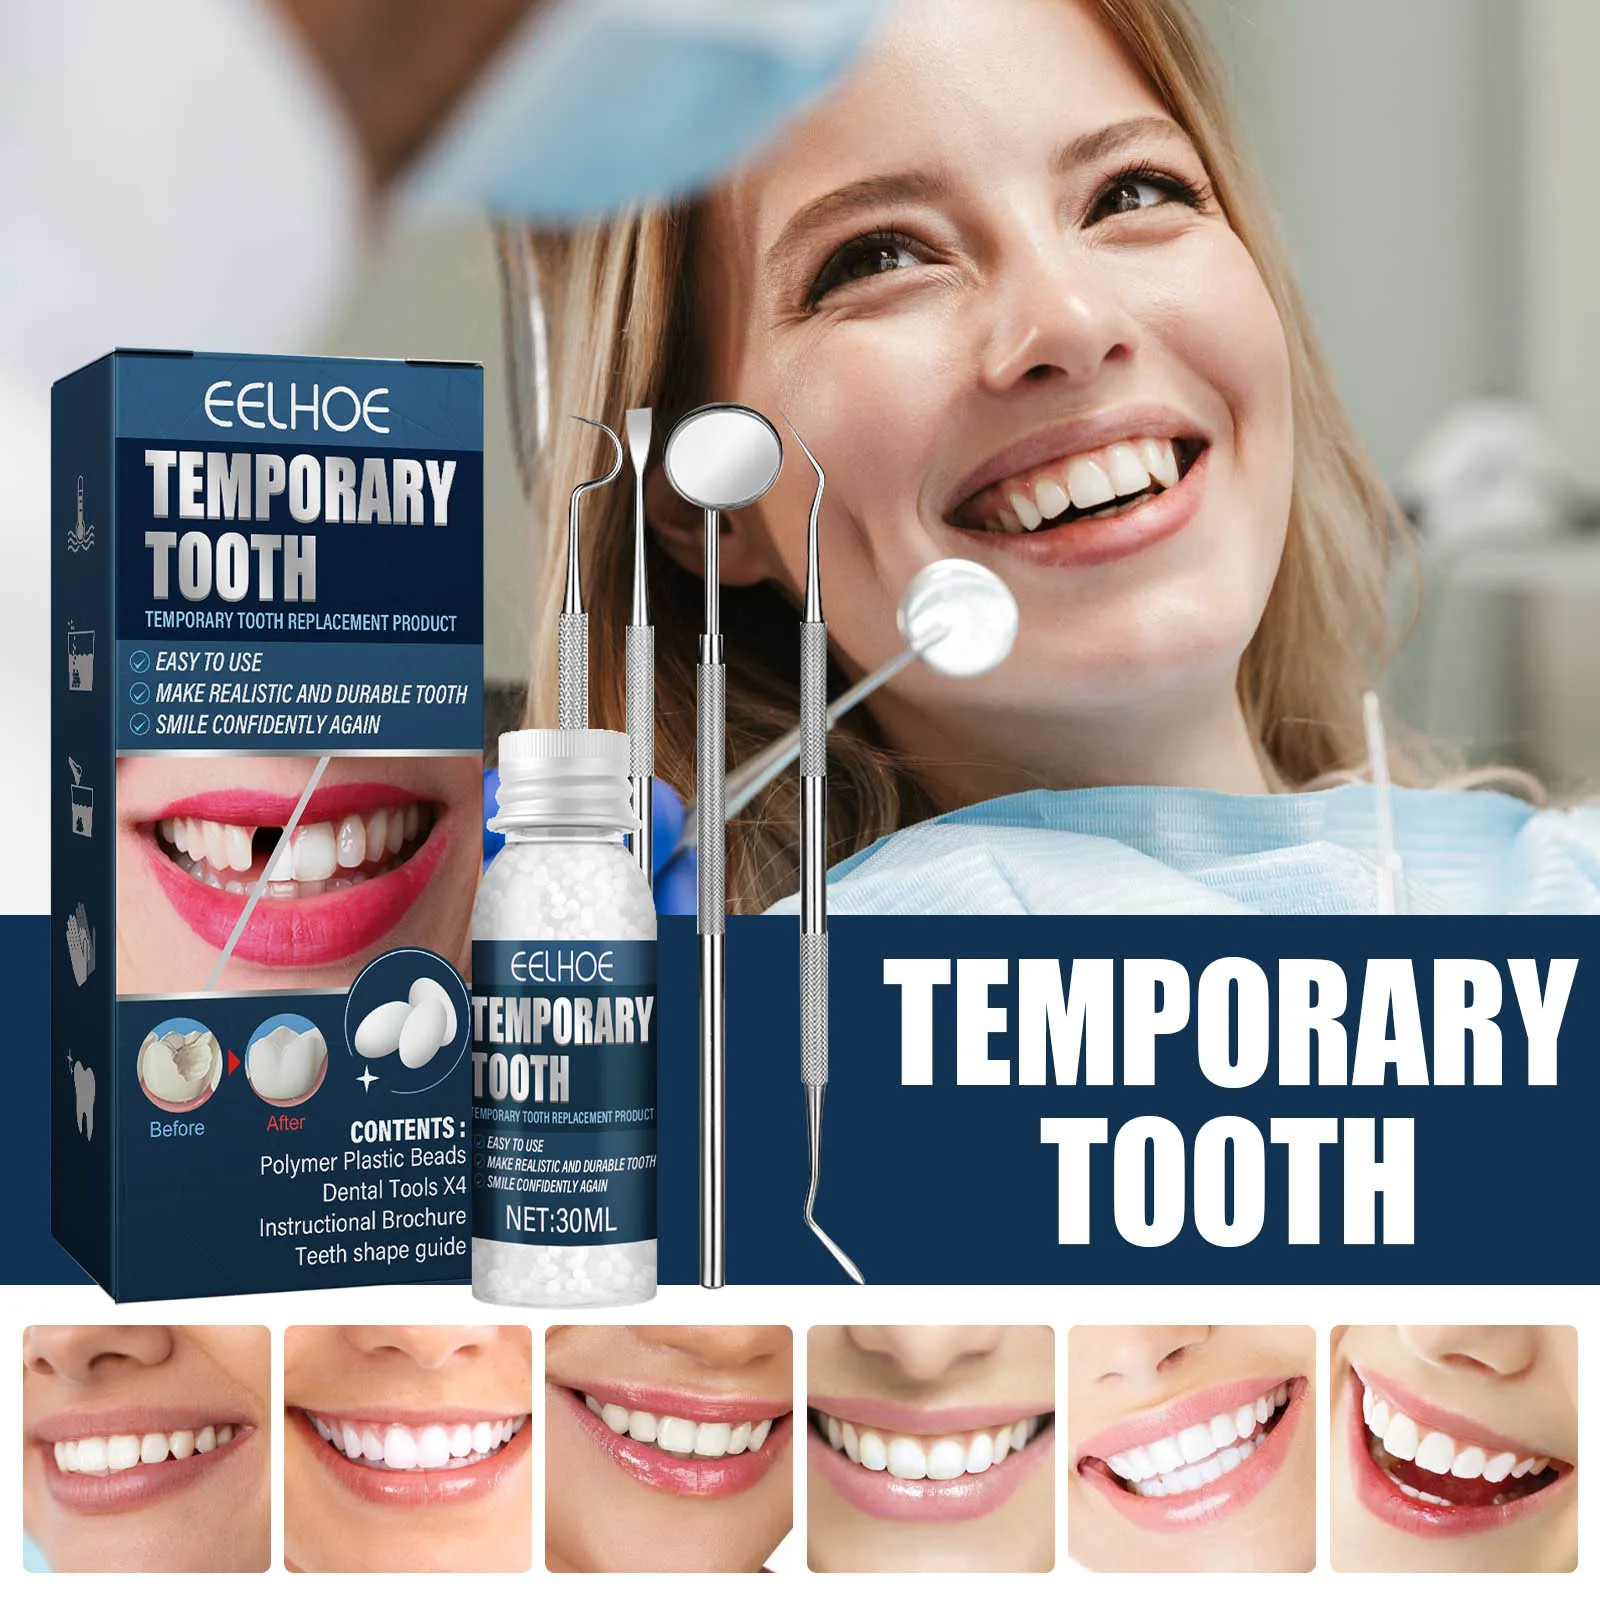 

EELHOE Dental Filling Kit, Plastic Teether, Temporary Filling of Missing and Broken Teeth, Tooth Repair to Fill Tooth Gaps